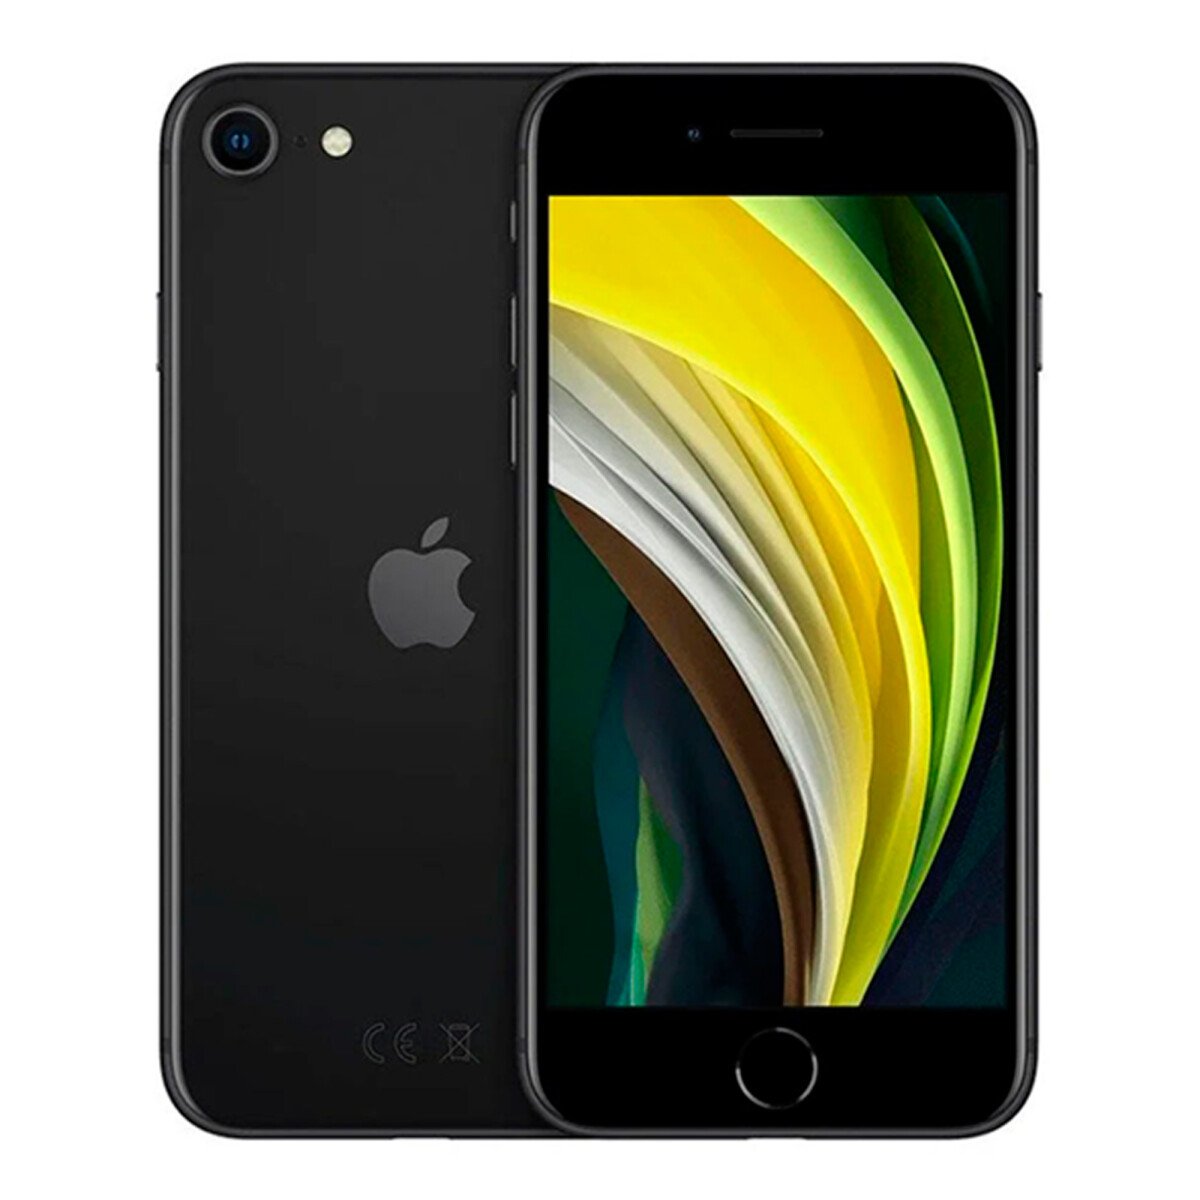 Apple - Smartphone Iphone se 2 - IP67. 4,7" Multitáctil Retina Ips Lcd Capacitiva. 4G. 6 Core. Ios 1 - 001 